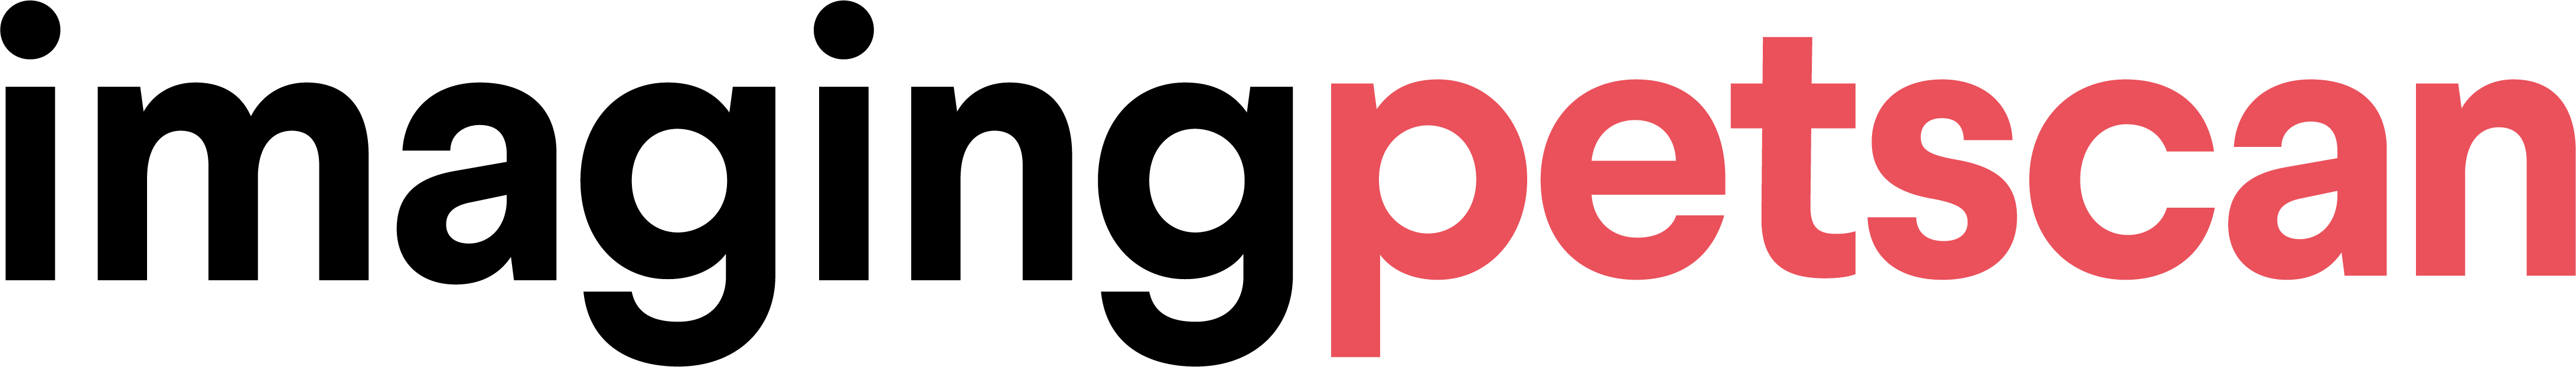 Logo Imaging Petscan 2020 Pantone032 U